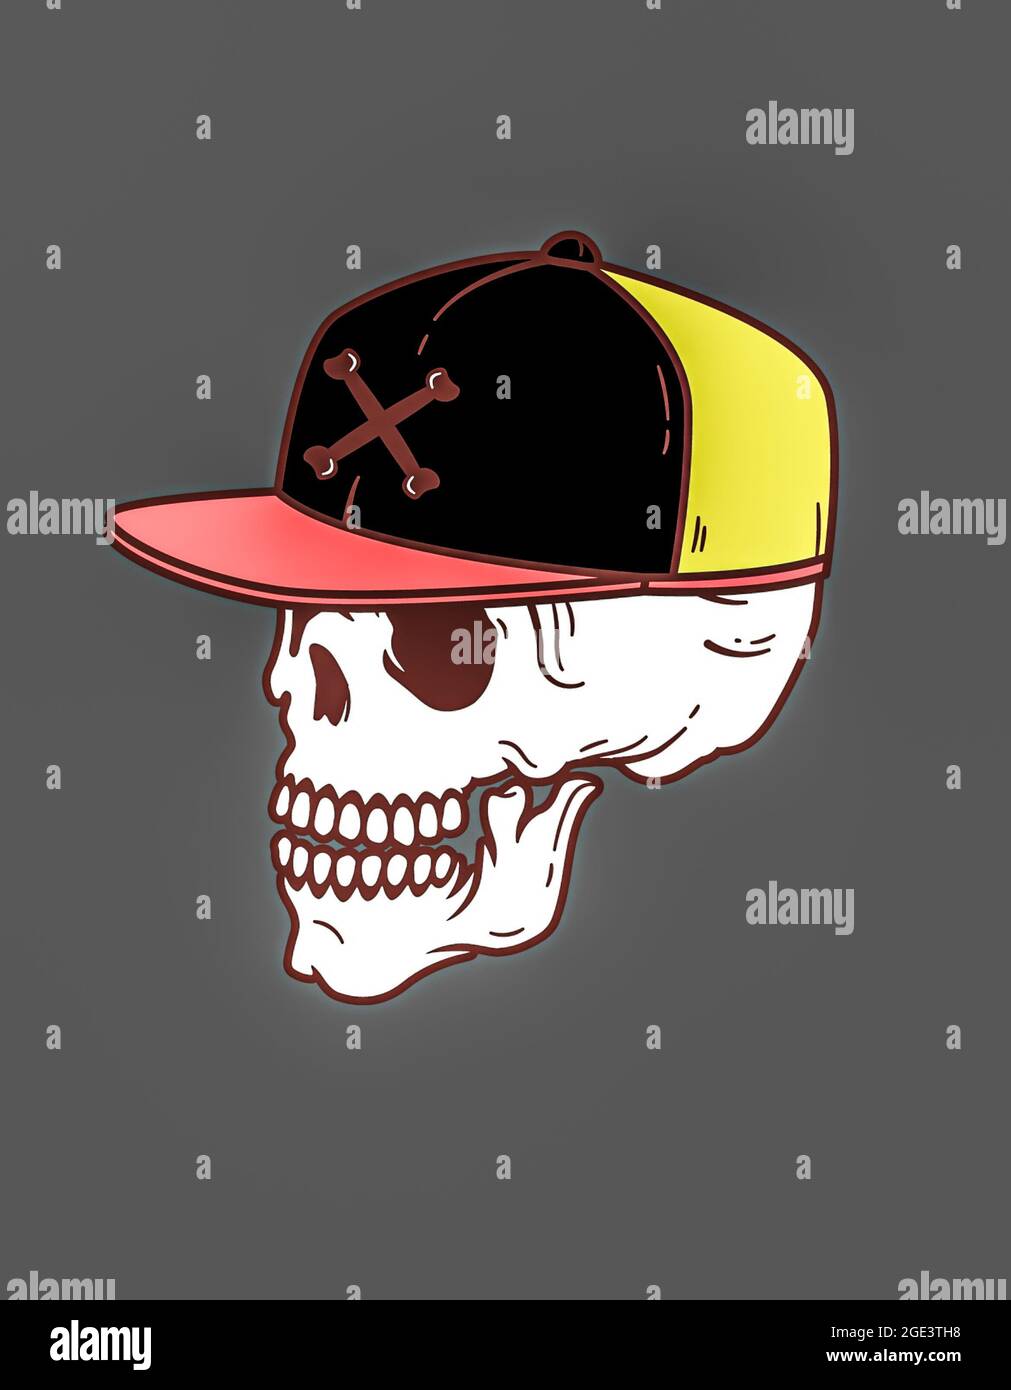 Skeleton head with cap graphic design Stock Photo